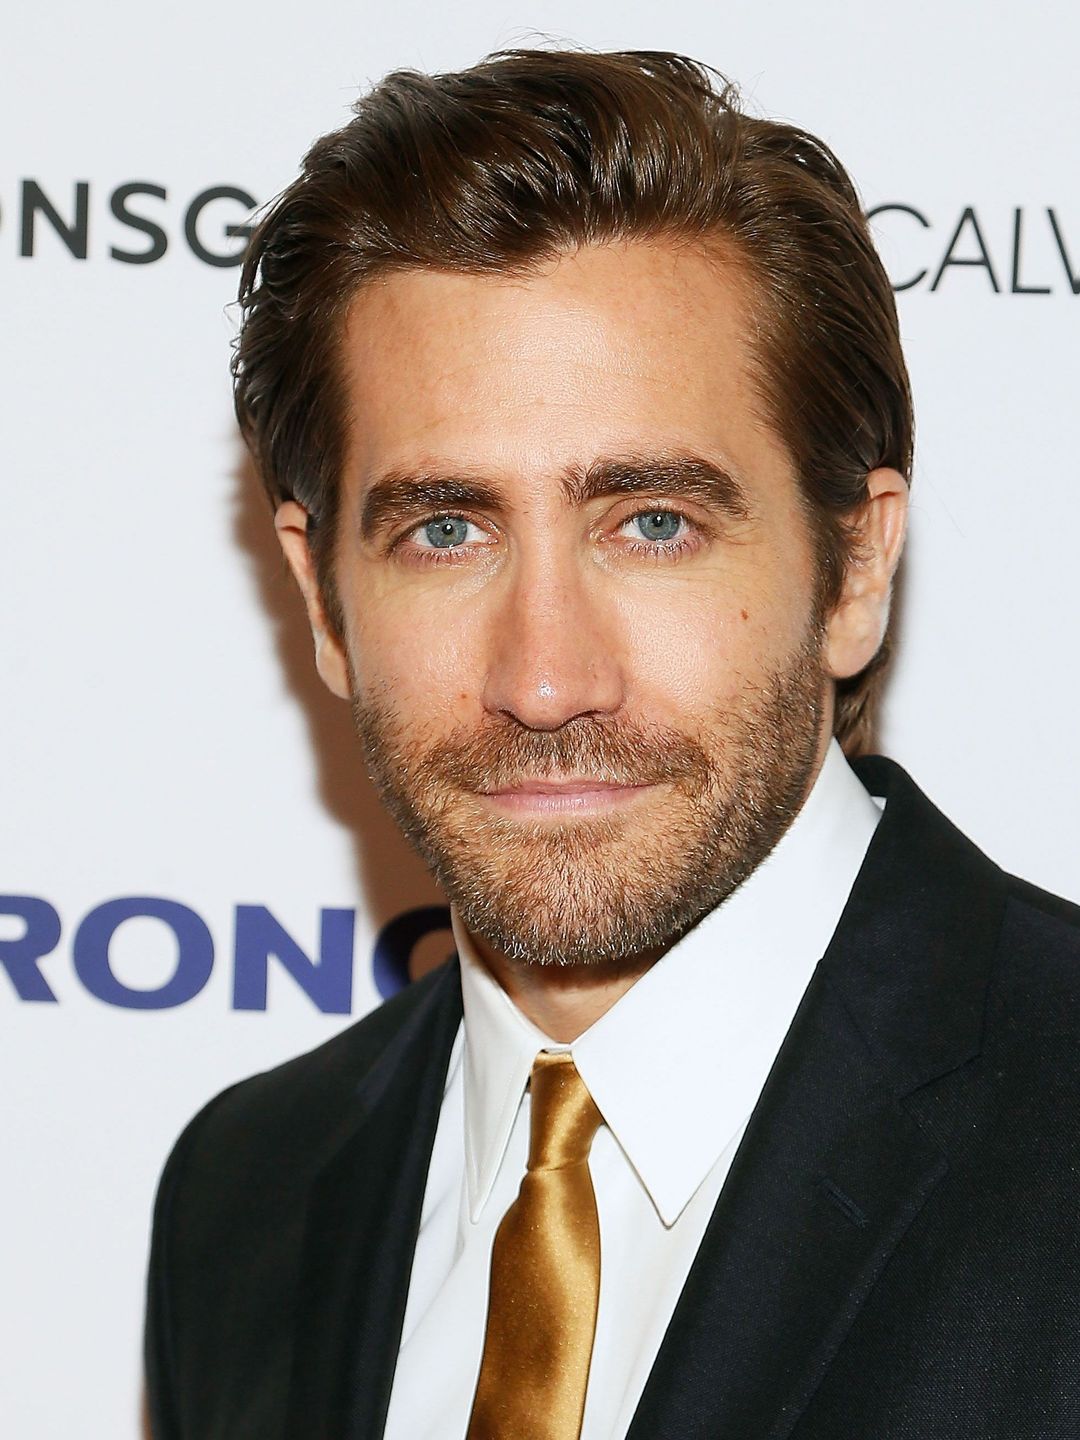 Jake Gyllenhaal who is his mother